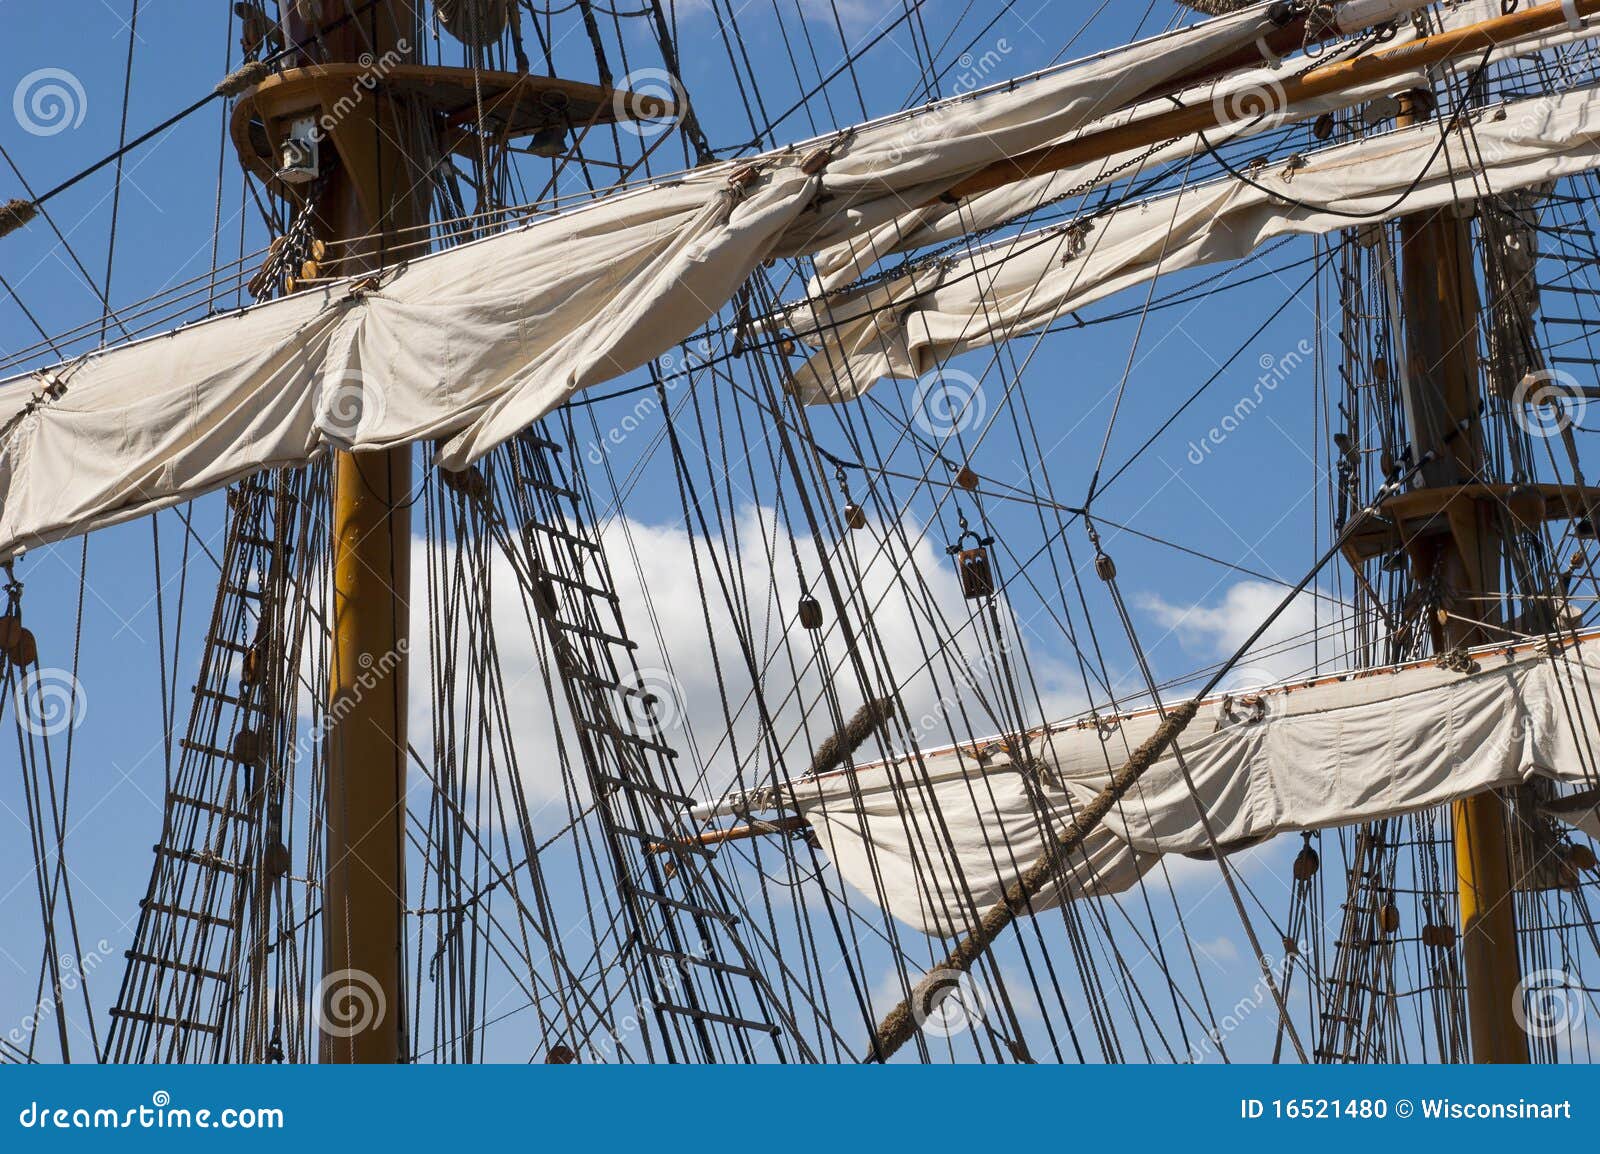 tall sailing ship, closeup detail of mast, sails